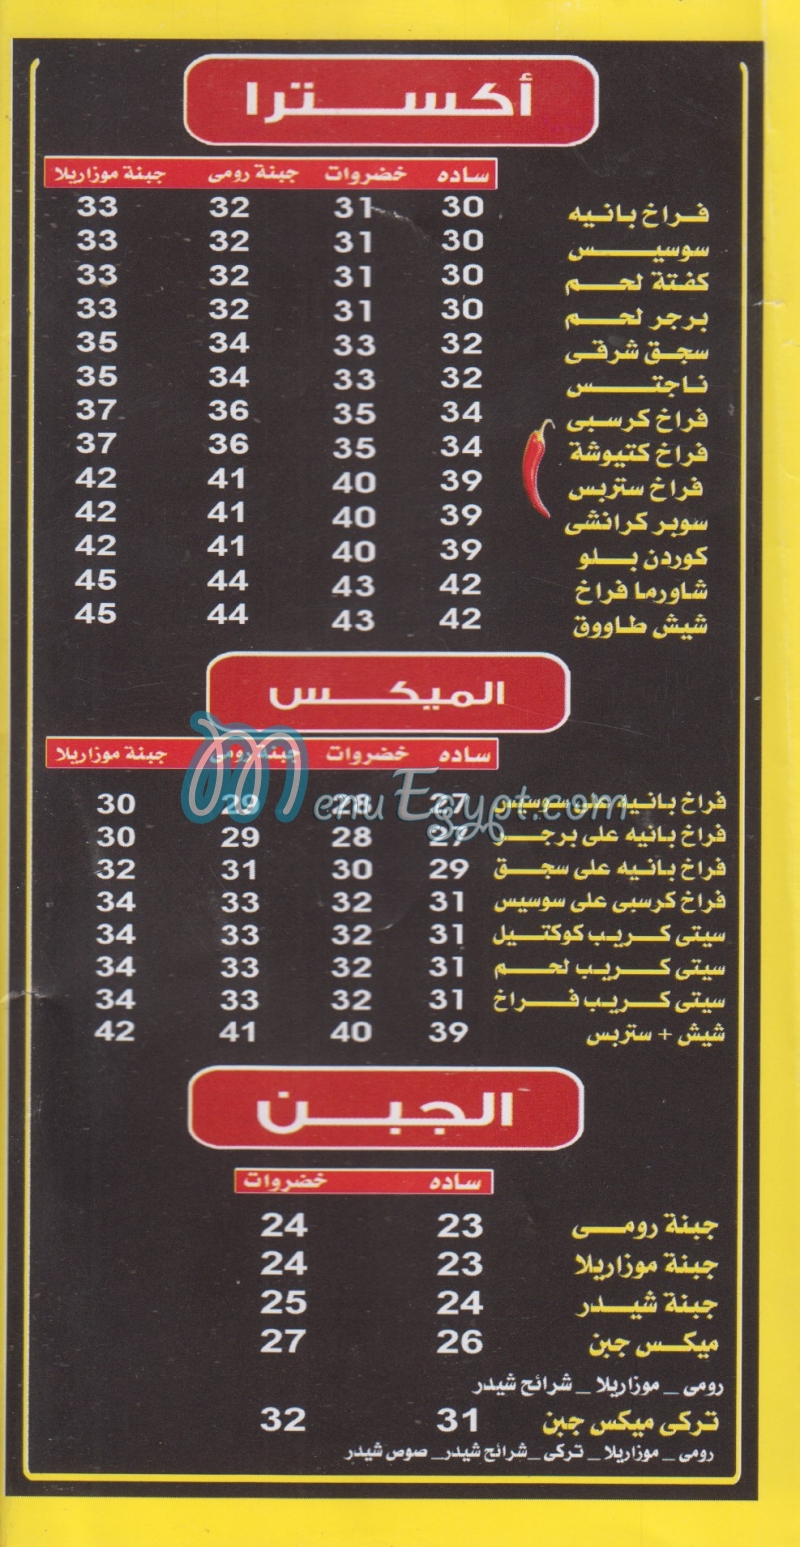 Crepe City menu prices